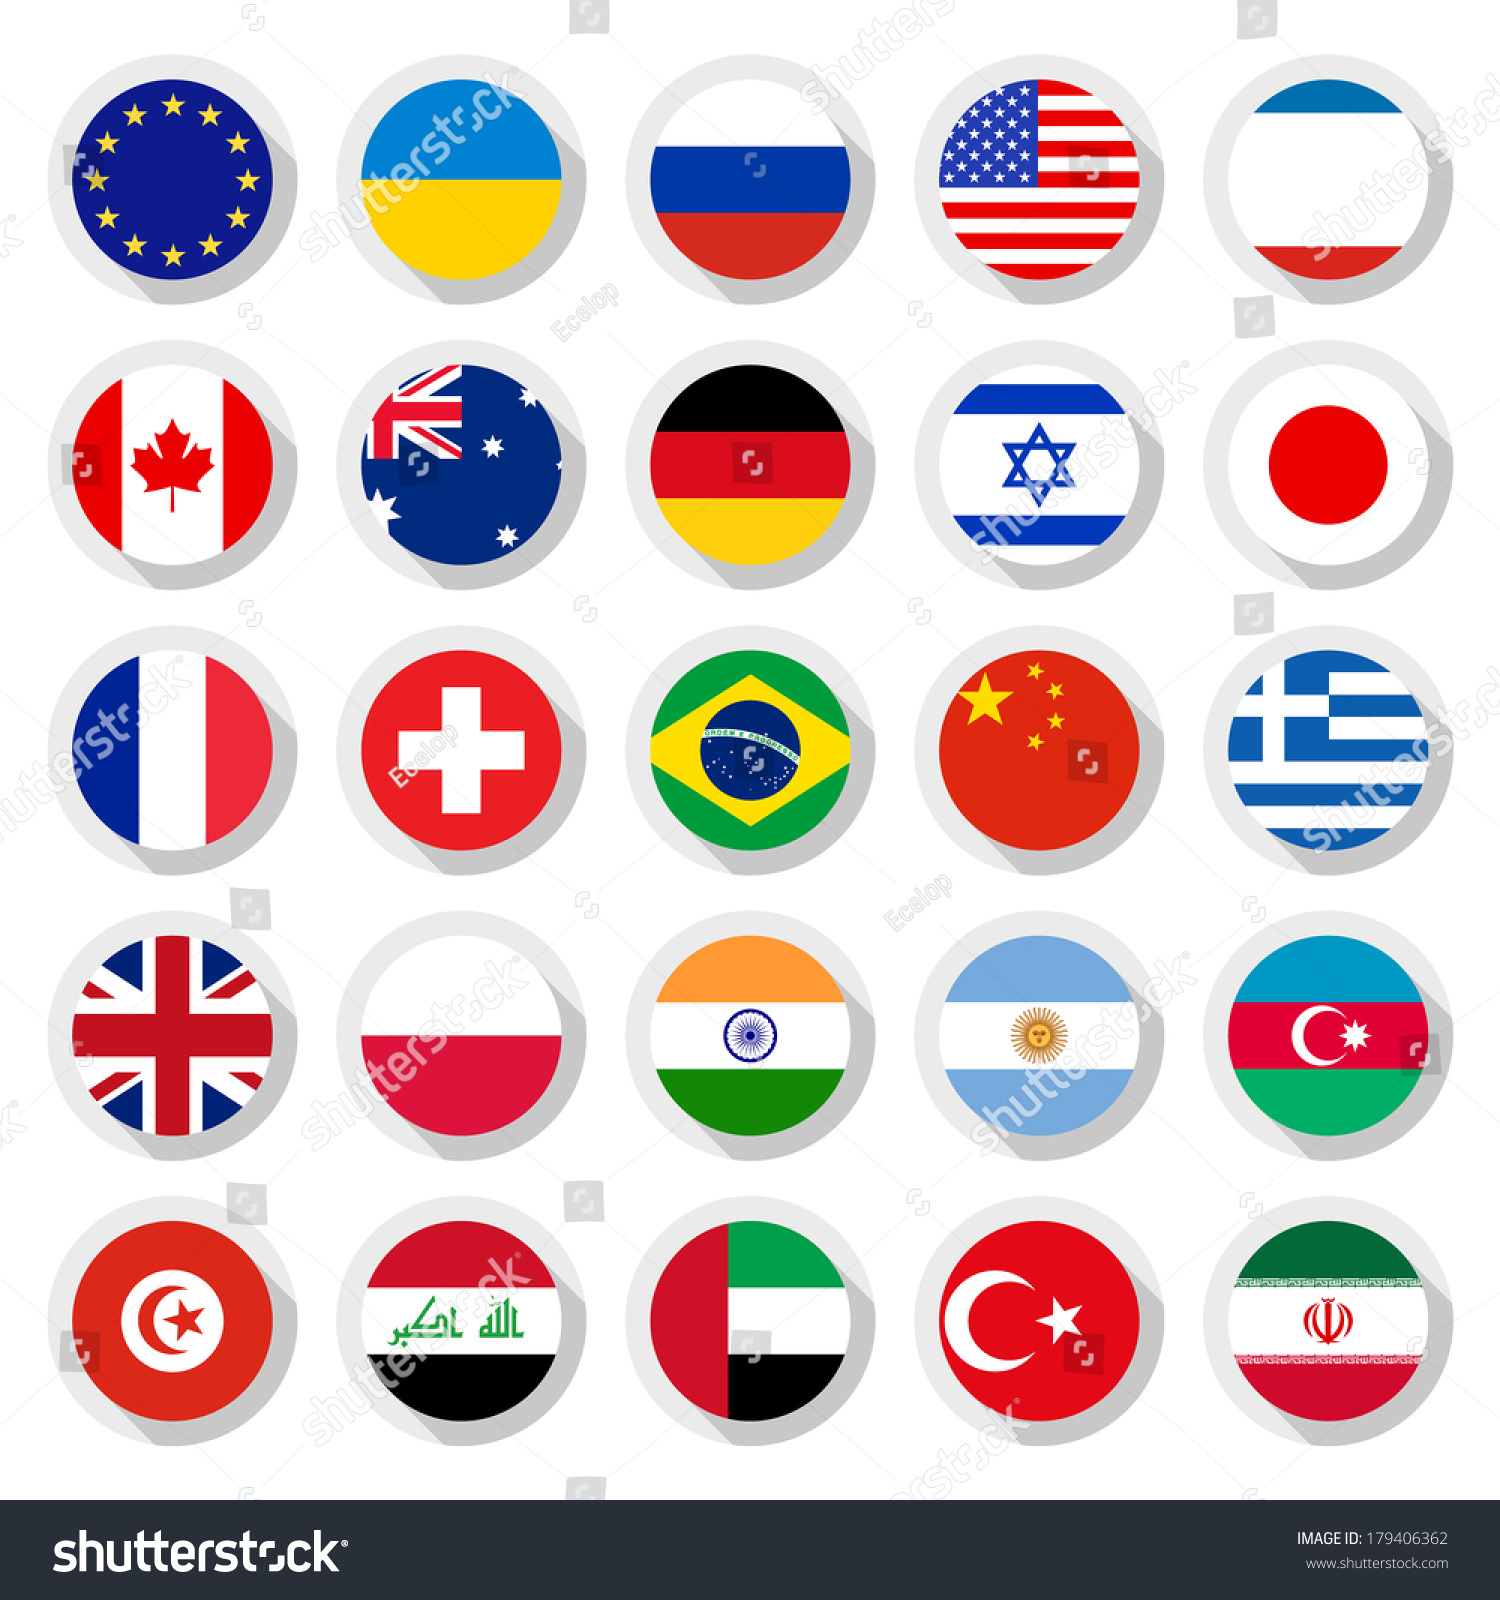 Flags Of The World Vector Illustration 179406362 Shutterstock